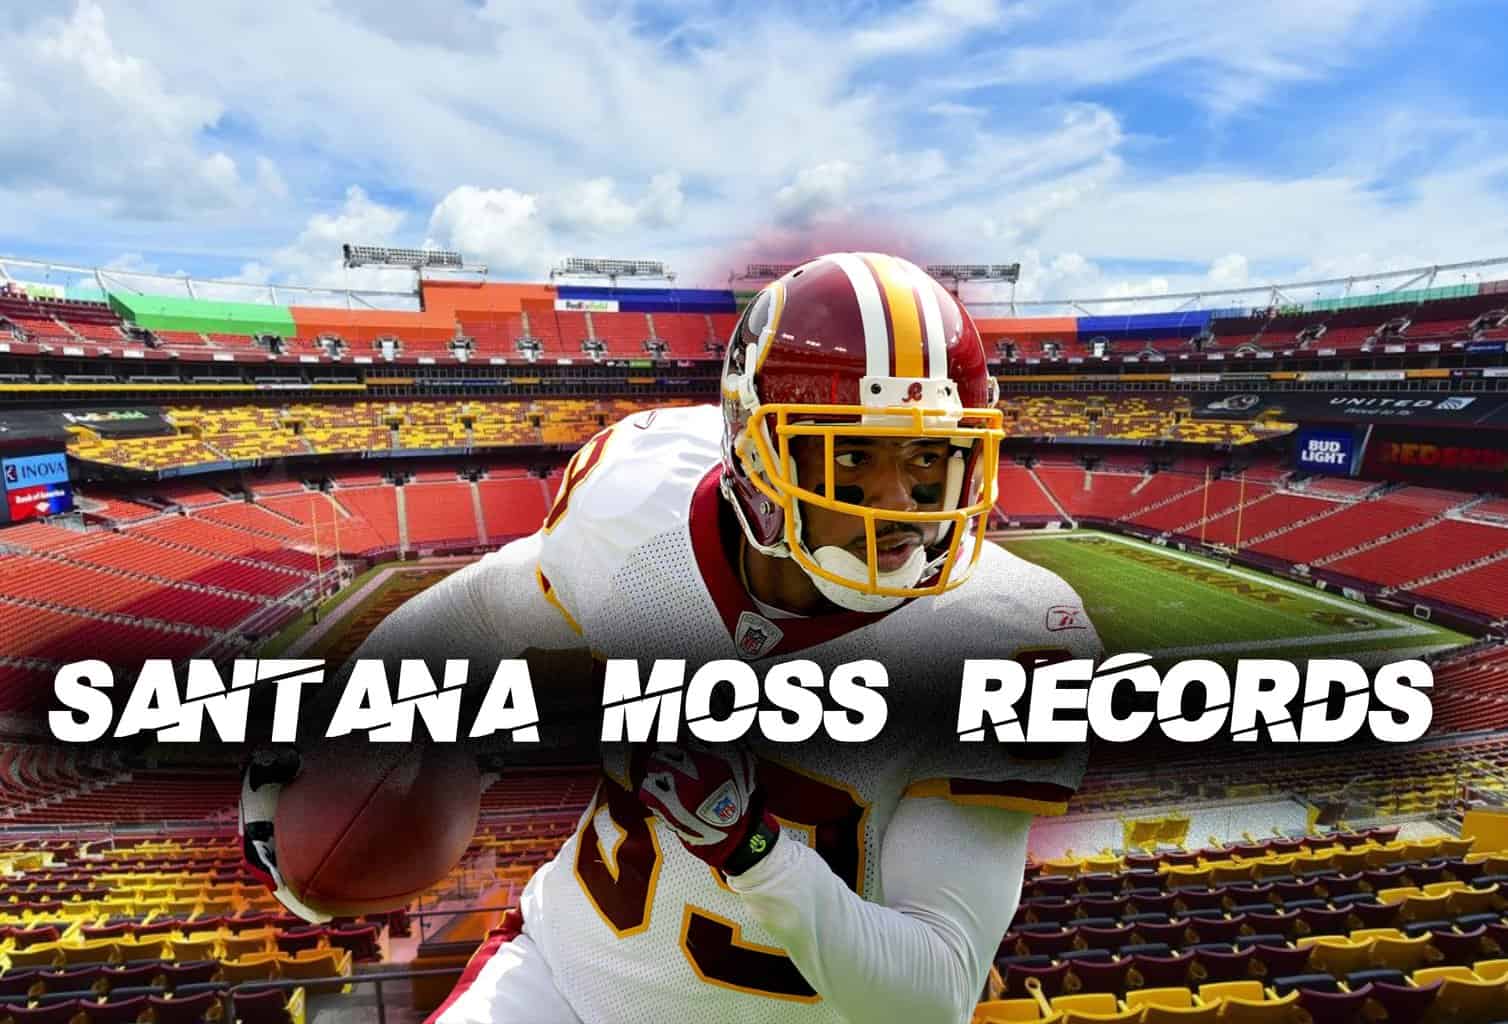 3 Greatest DC Records Santana Moss Still Owns - Pro Sports Outlook